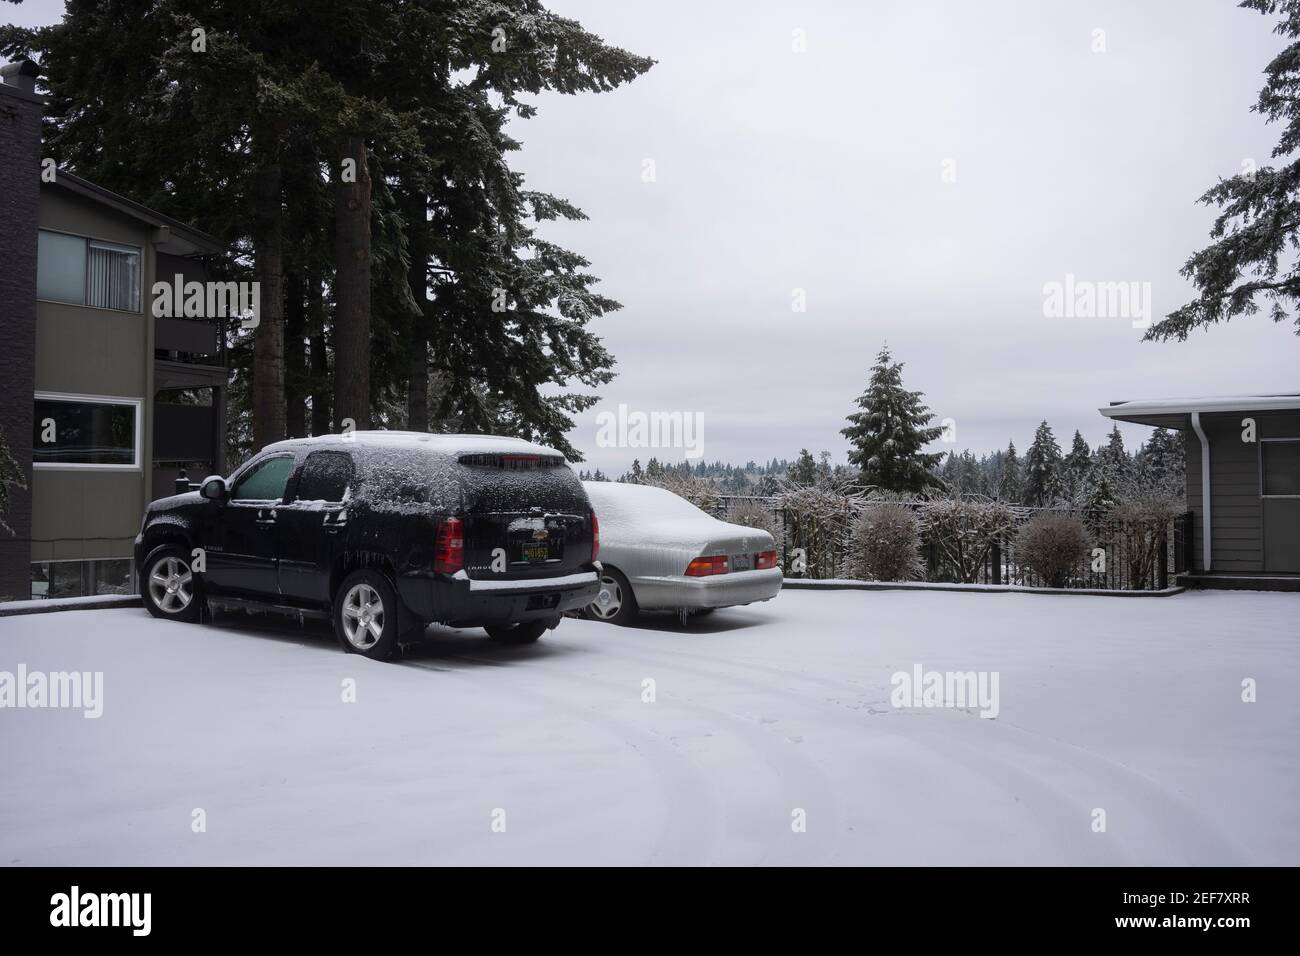 A neighborhood parking lot in Lake Oswego, Oregon, on a snowy day. Stock Photo